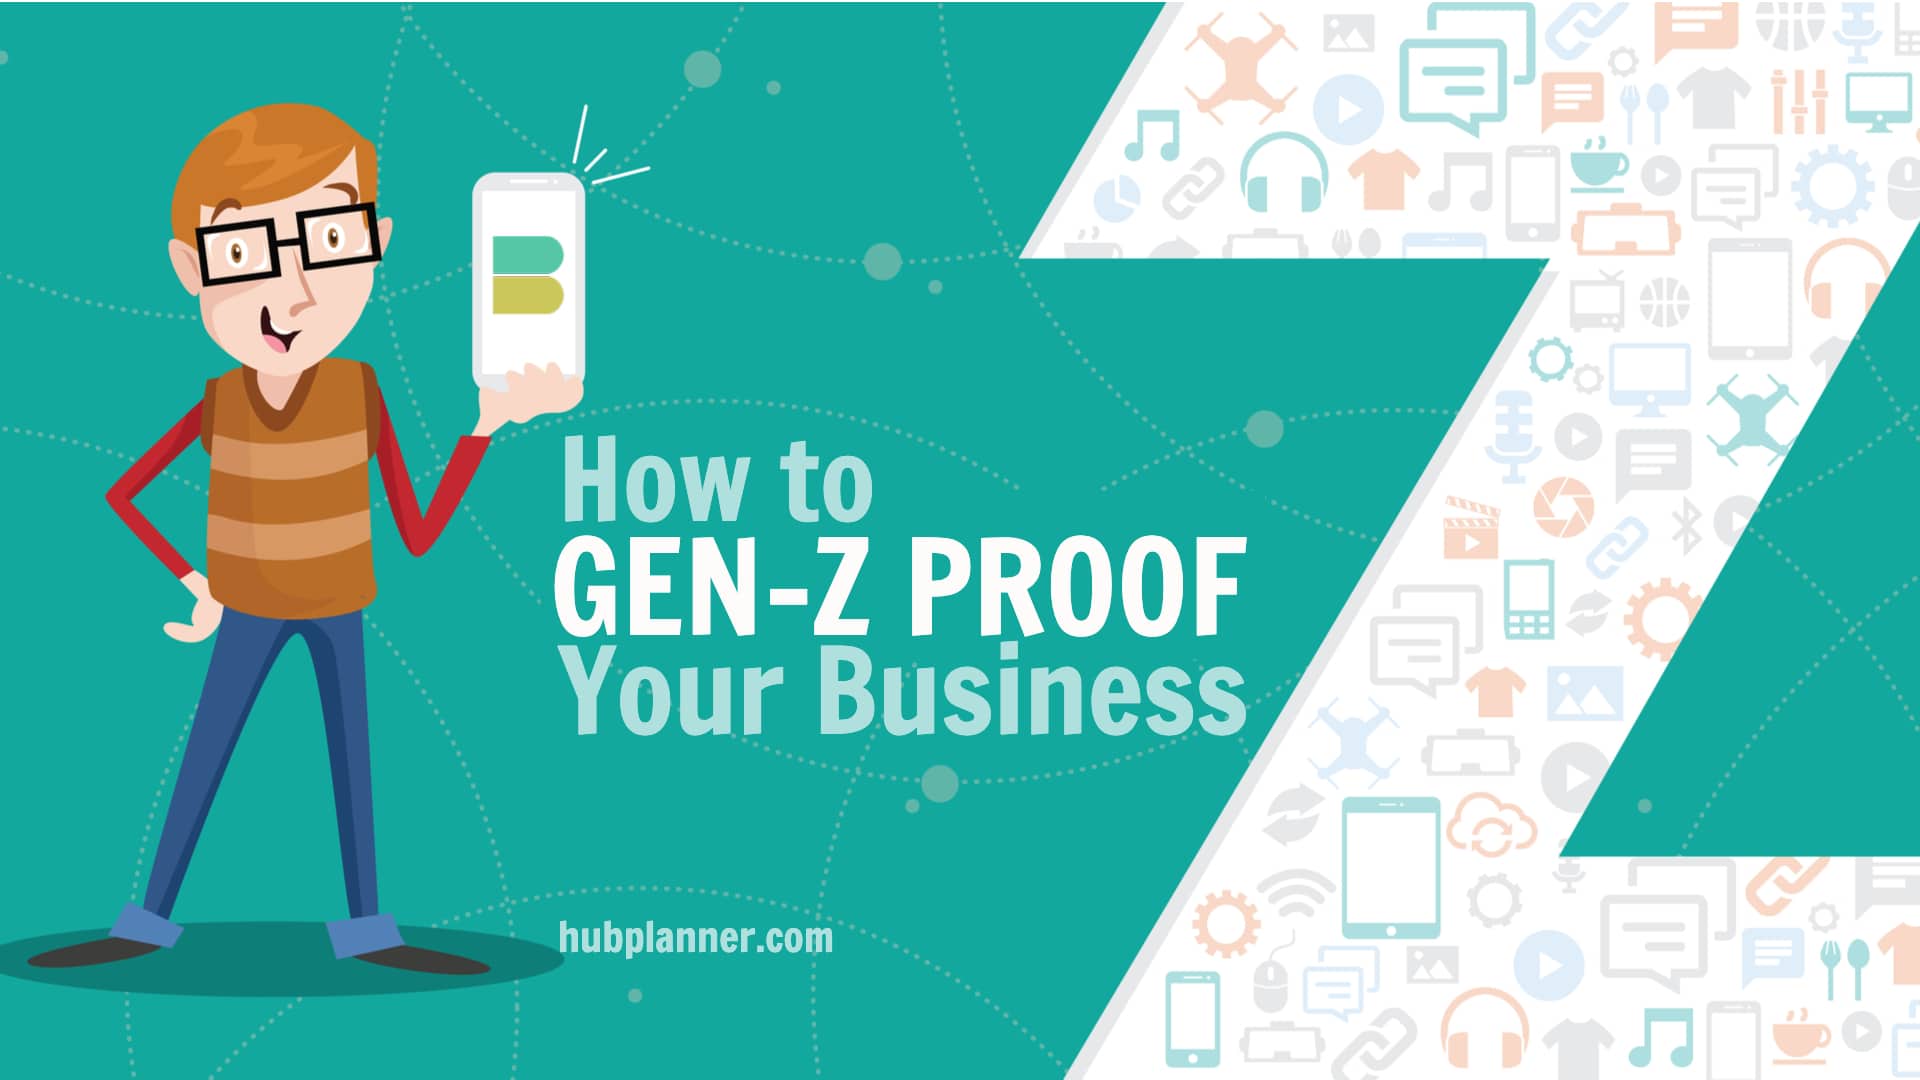 Gen-Z Proof Your Business